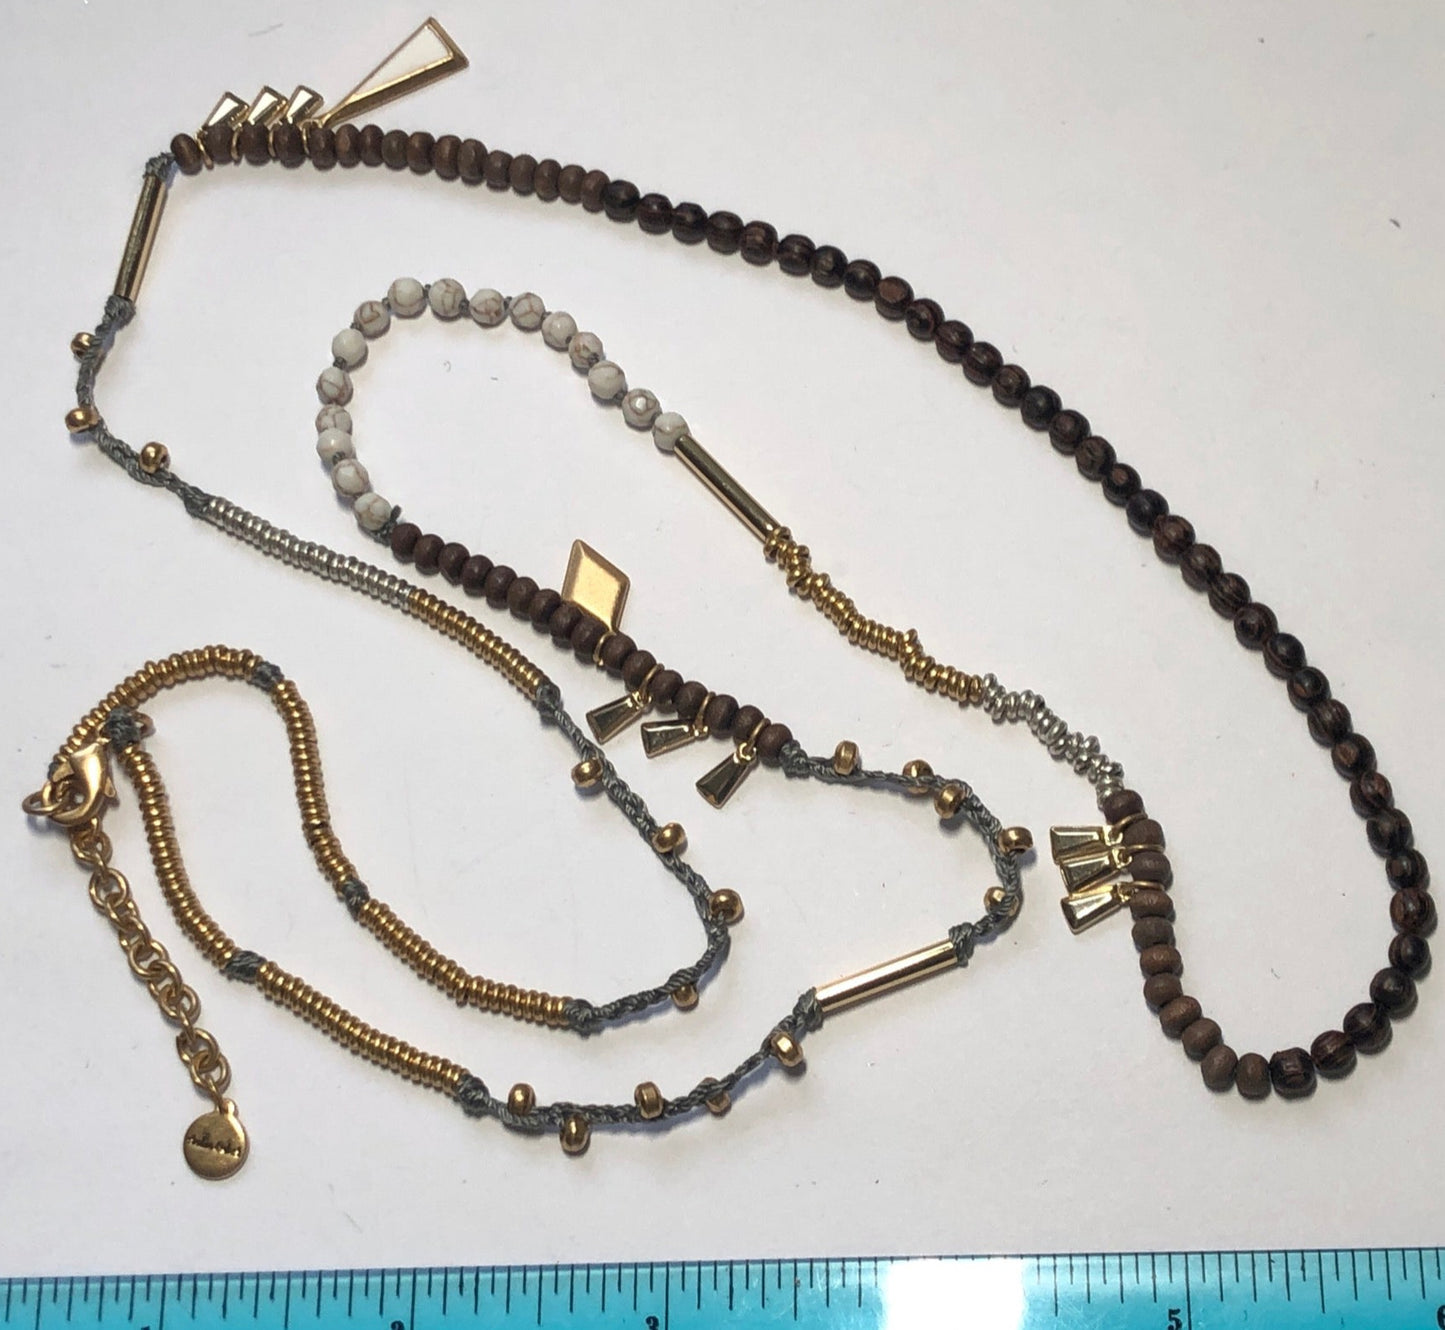 Stella & Dot 35" long chain necklace white stone bead gold tone